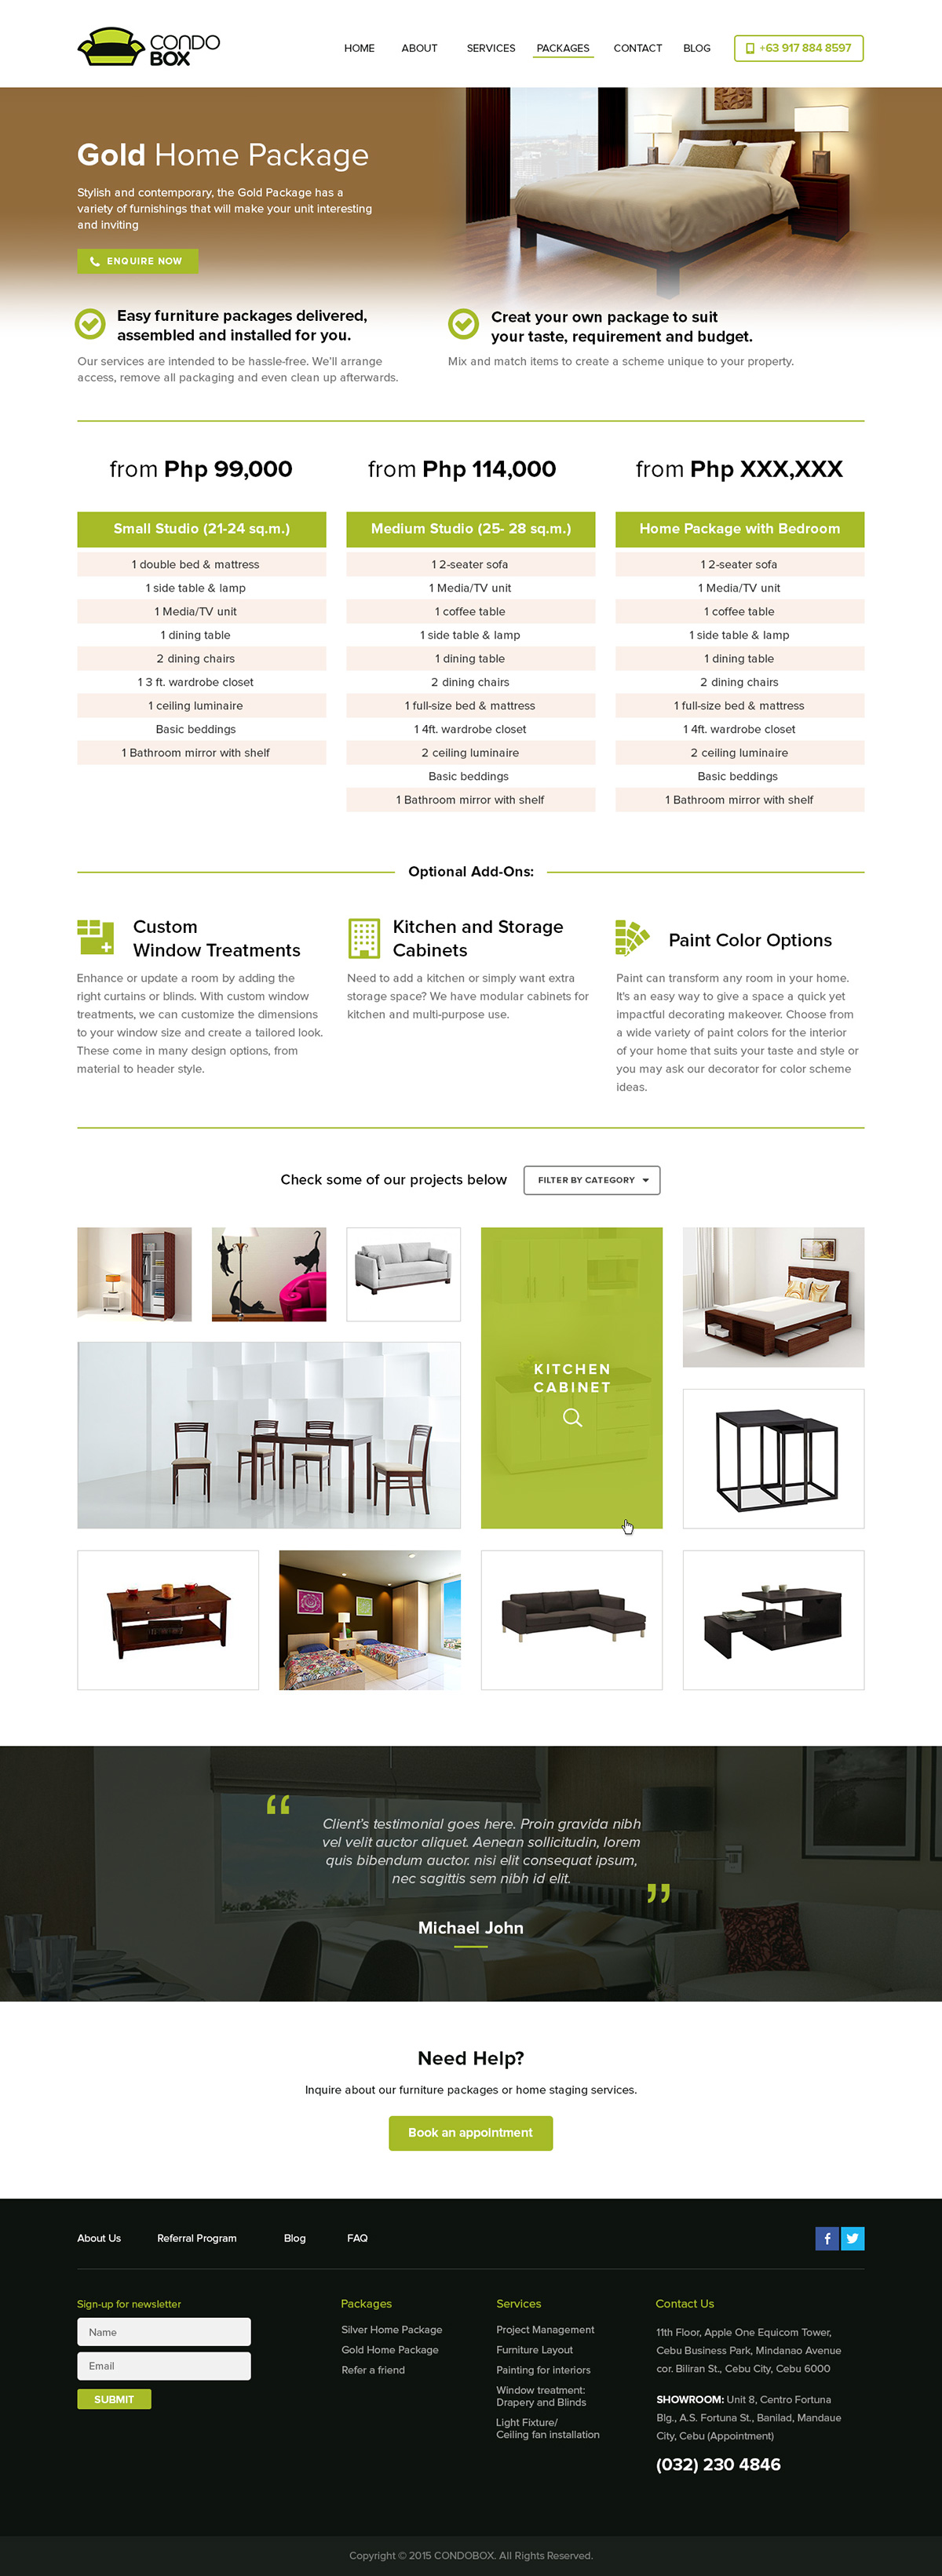 condobox Web Interior package website appliances flat design full image full width Clean Design